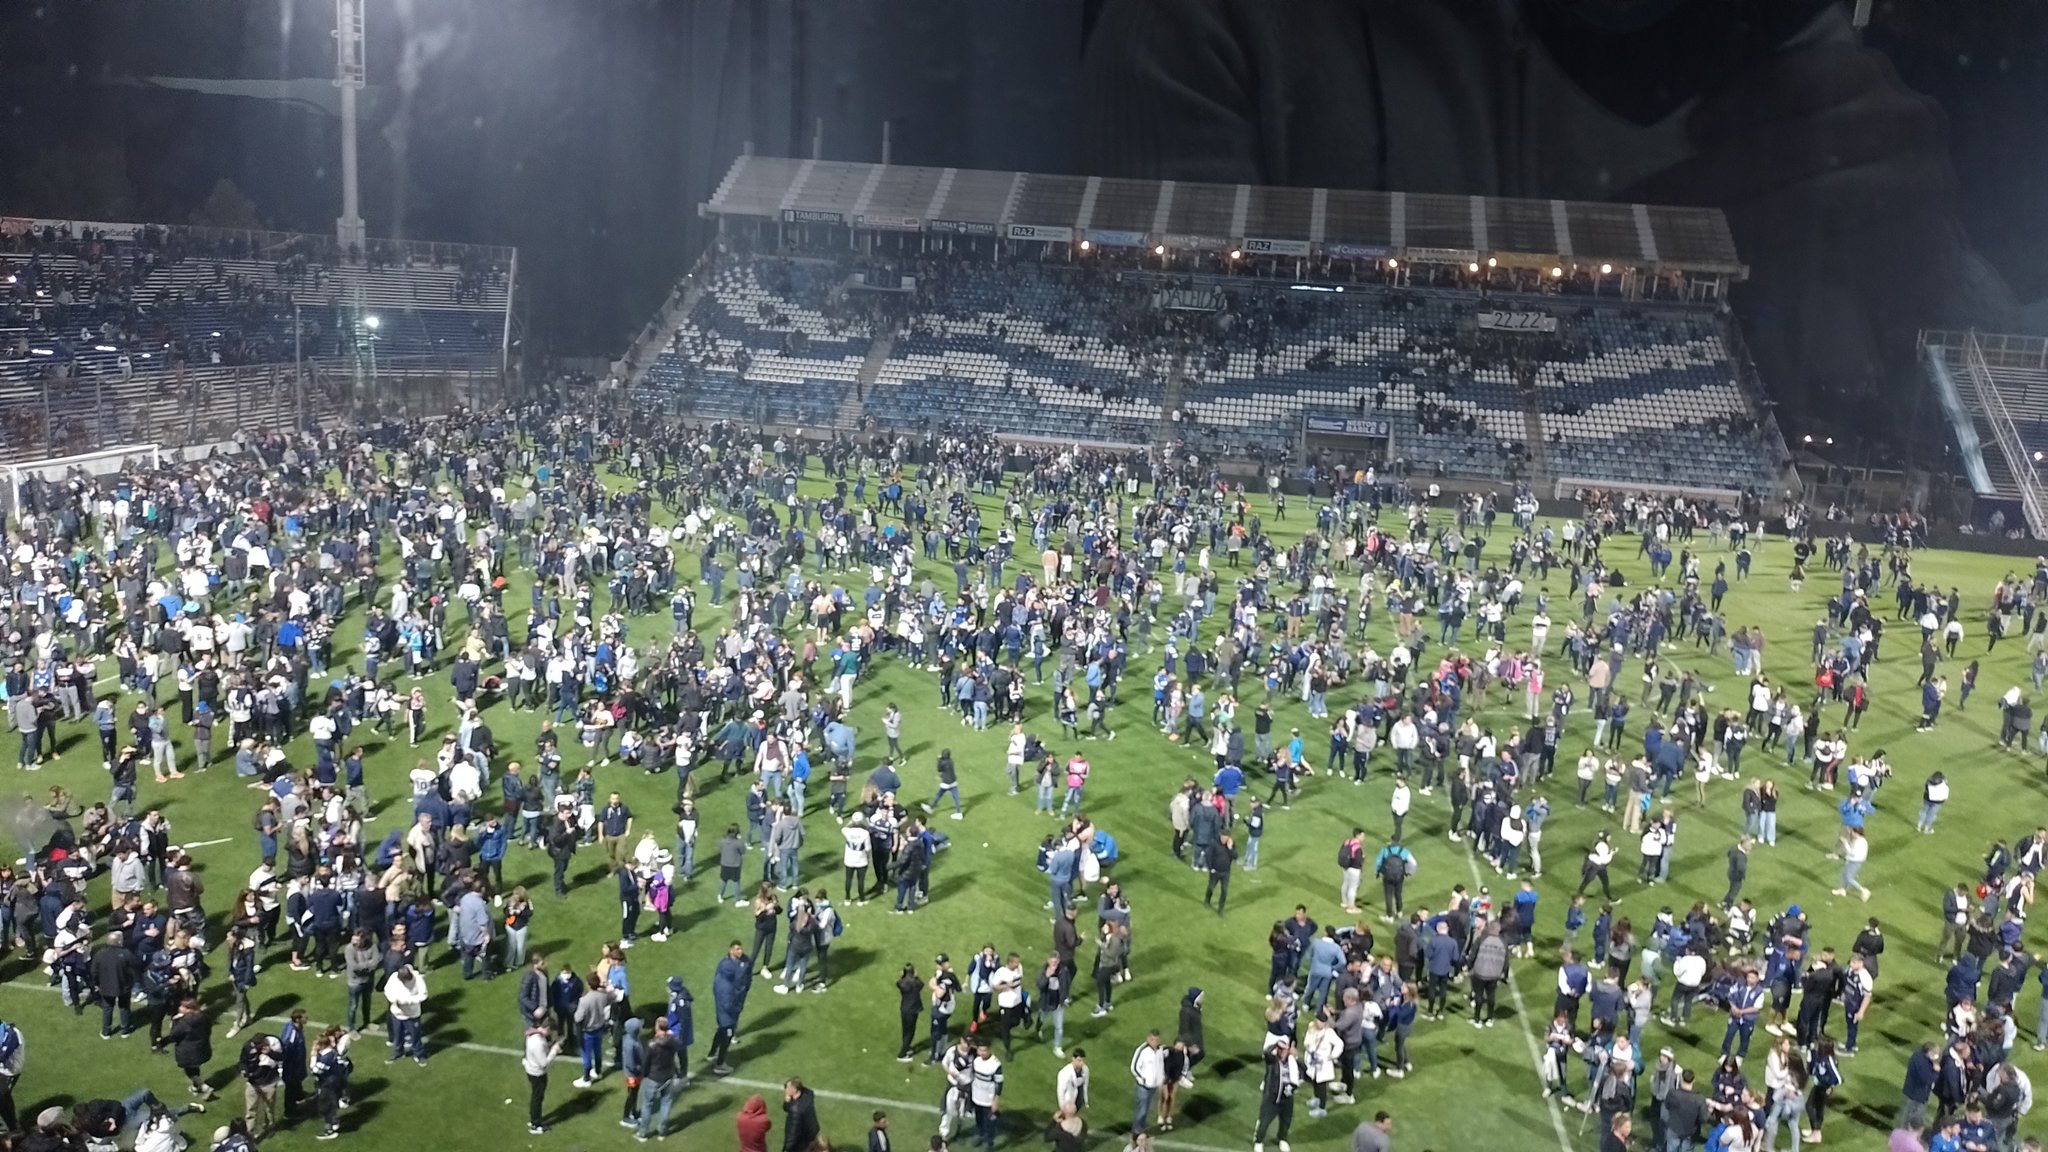 Gas lacrimógeno generó caos en las gradas del estadio de Gimnasia La Plata. Foto: Twitter/ Nicolás Nardini